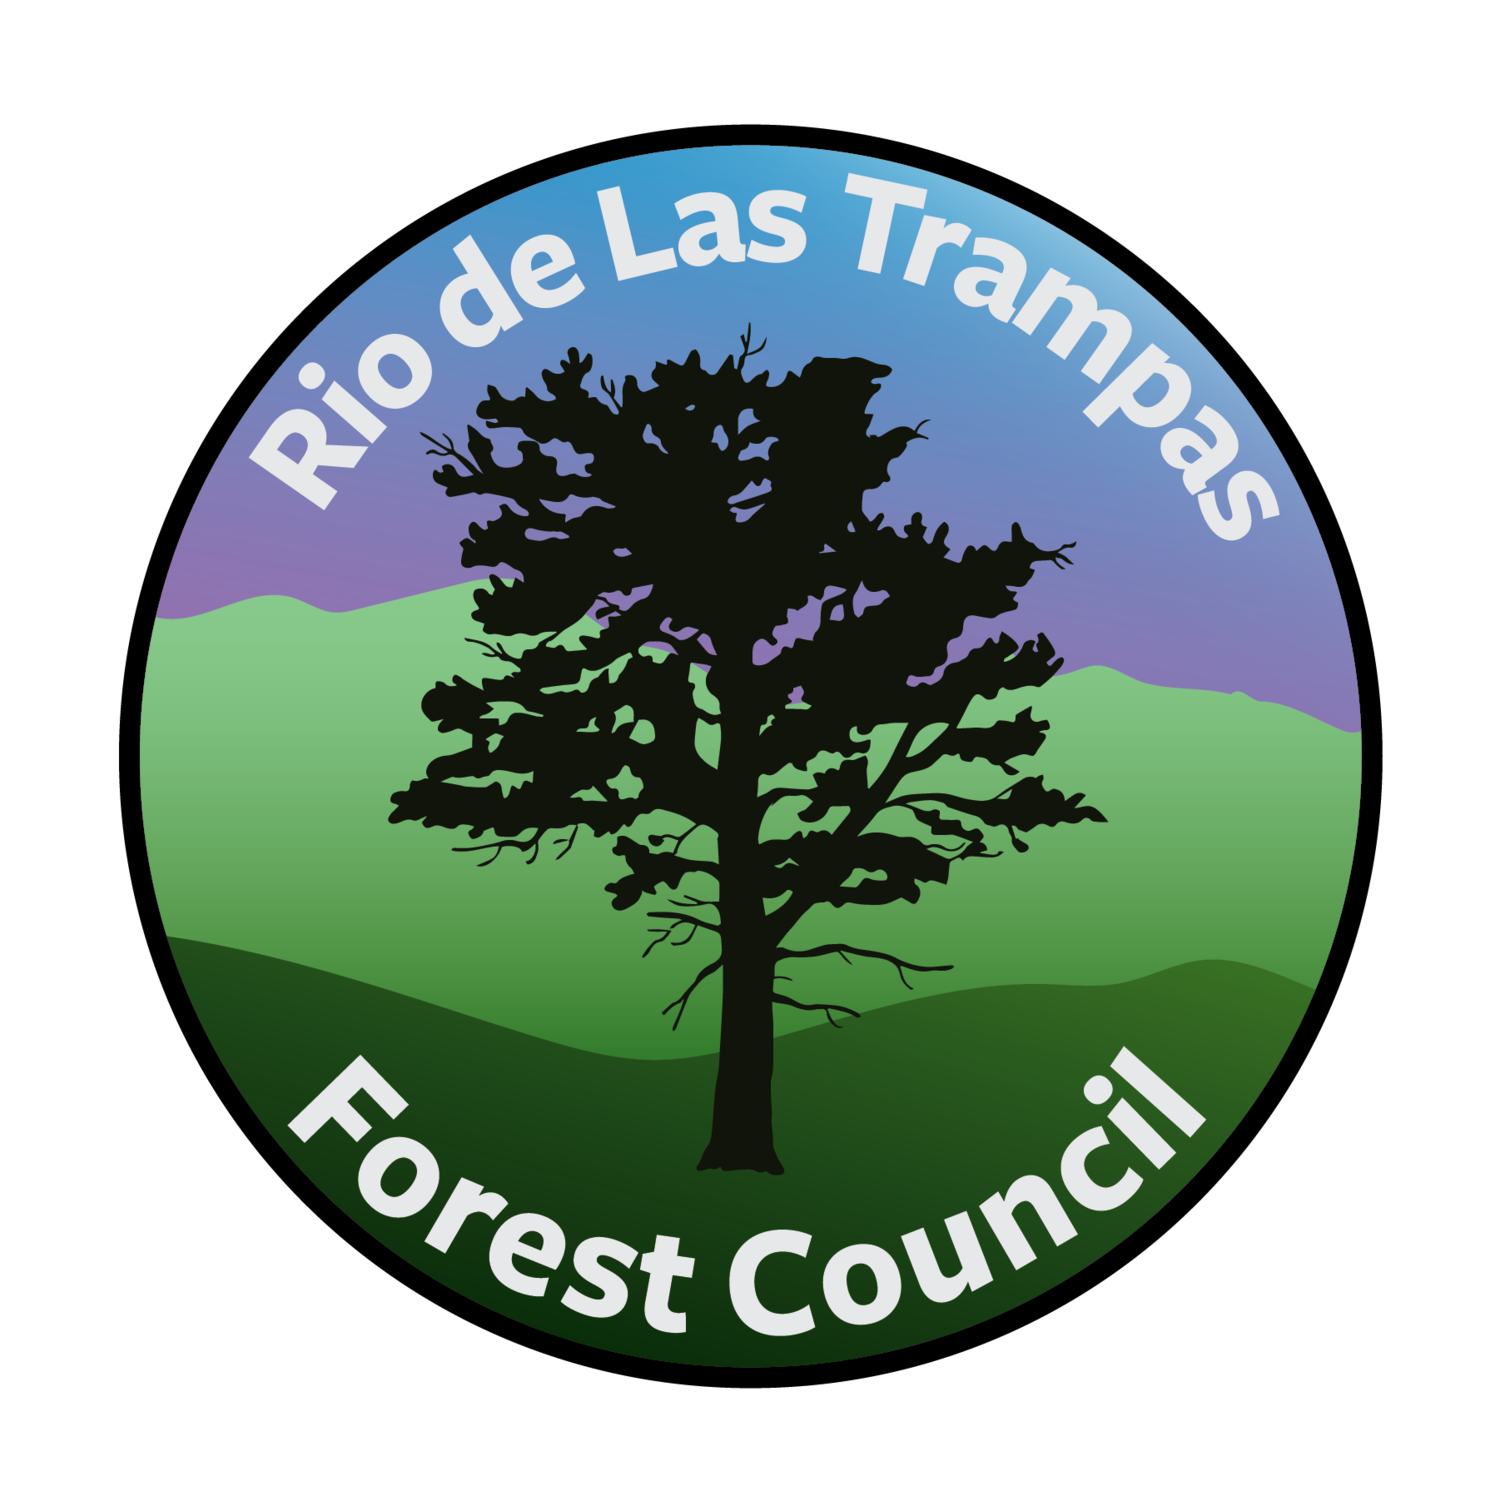 Rio de Las Trampas Forest Council